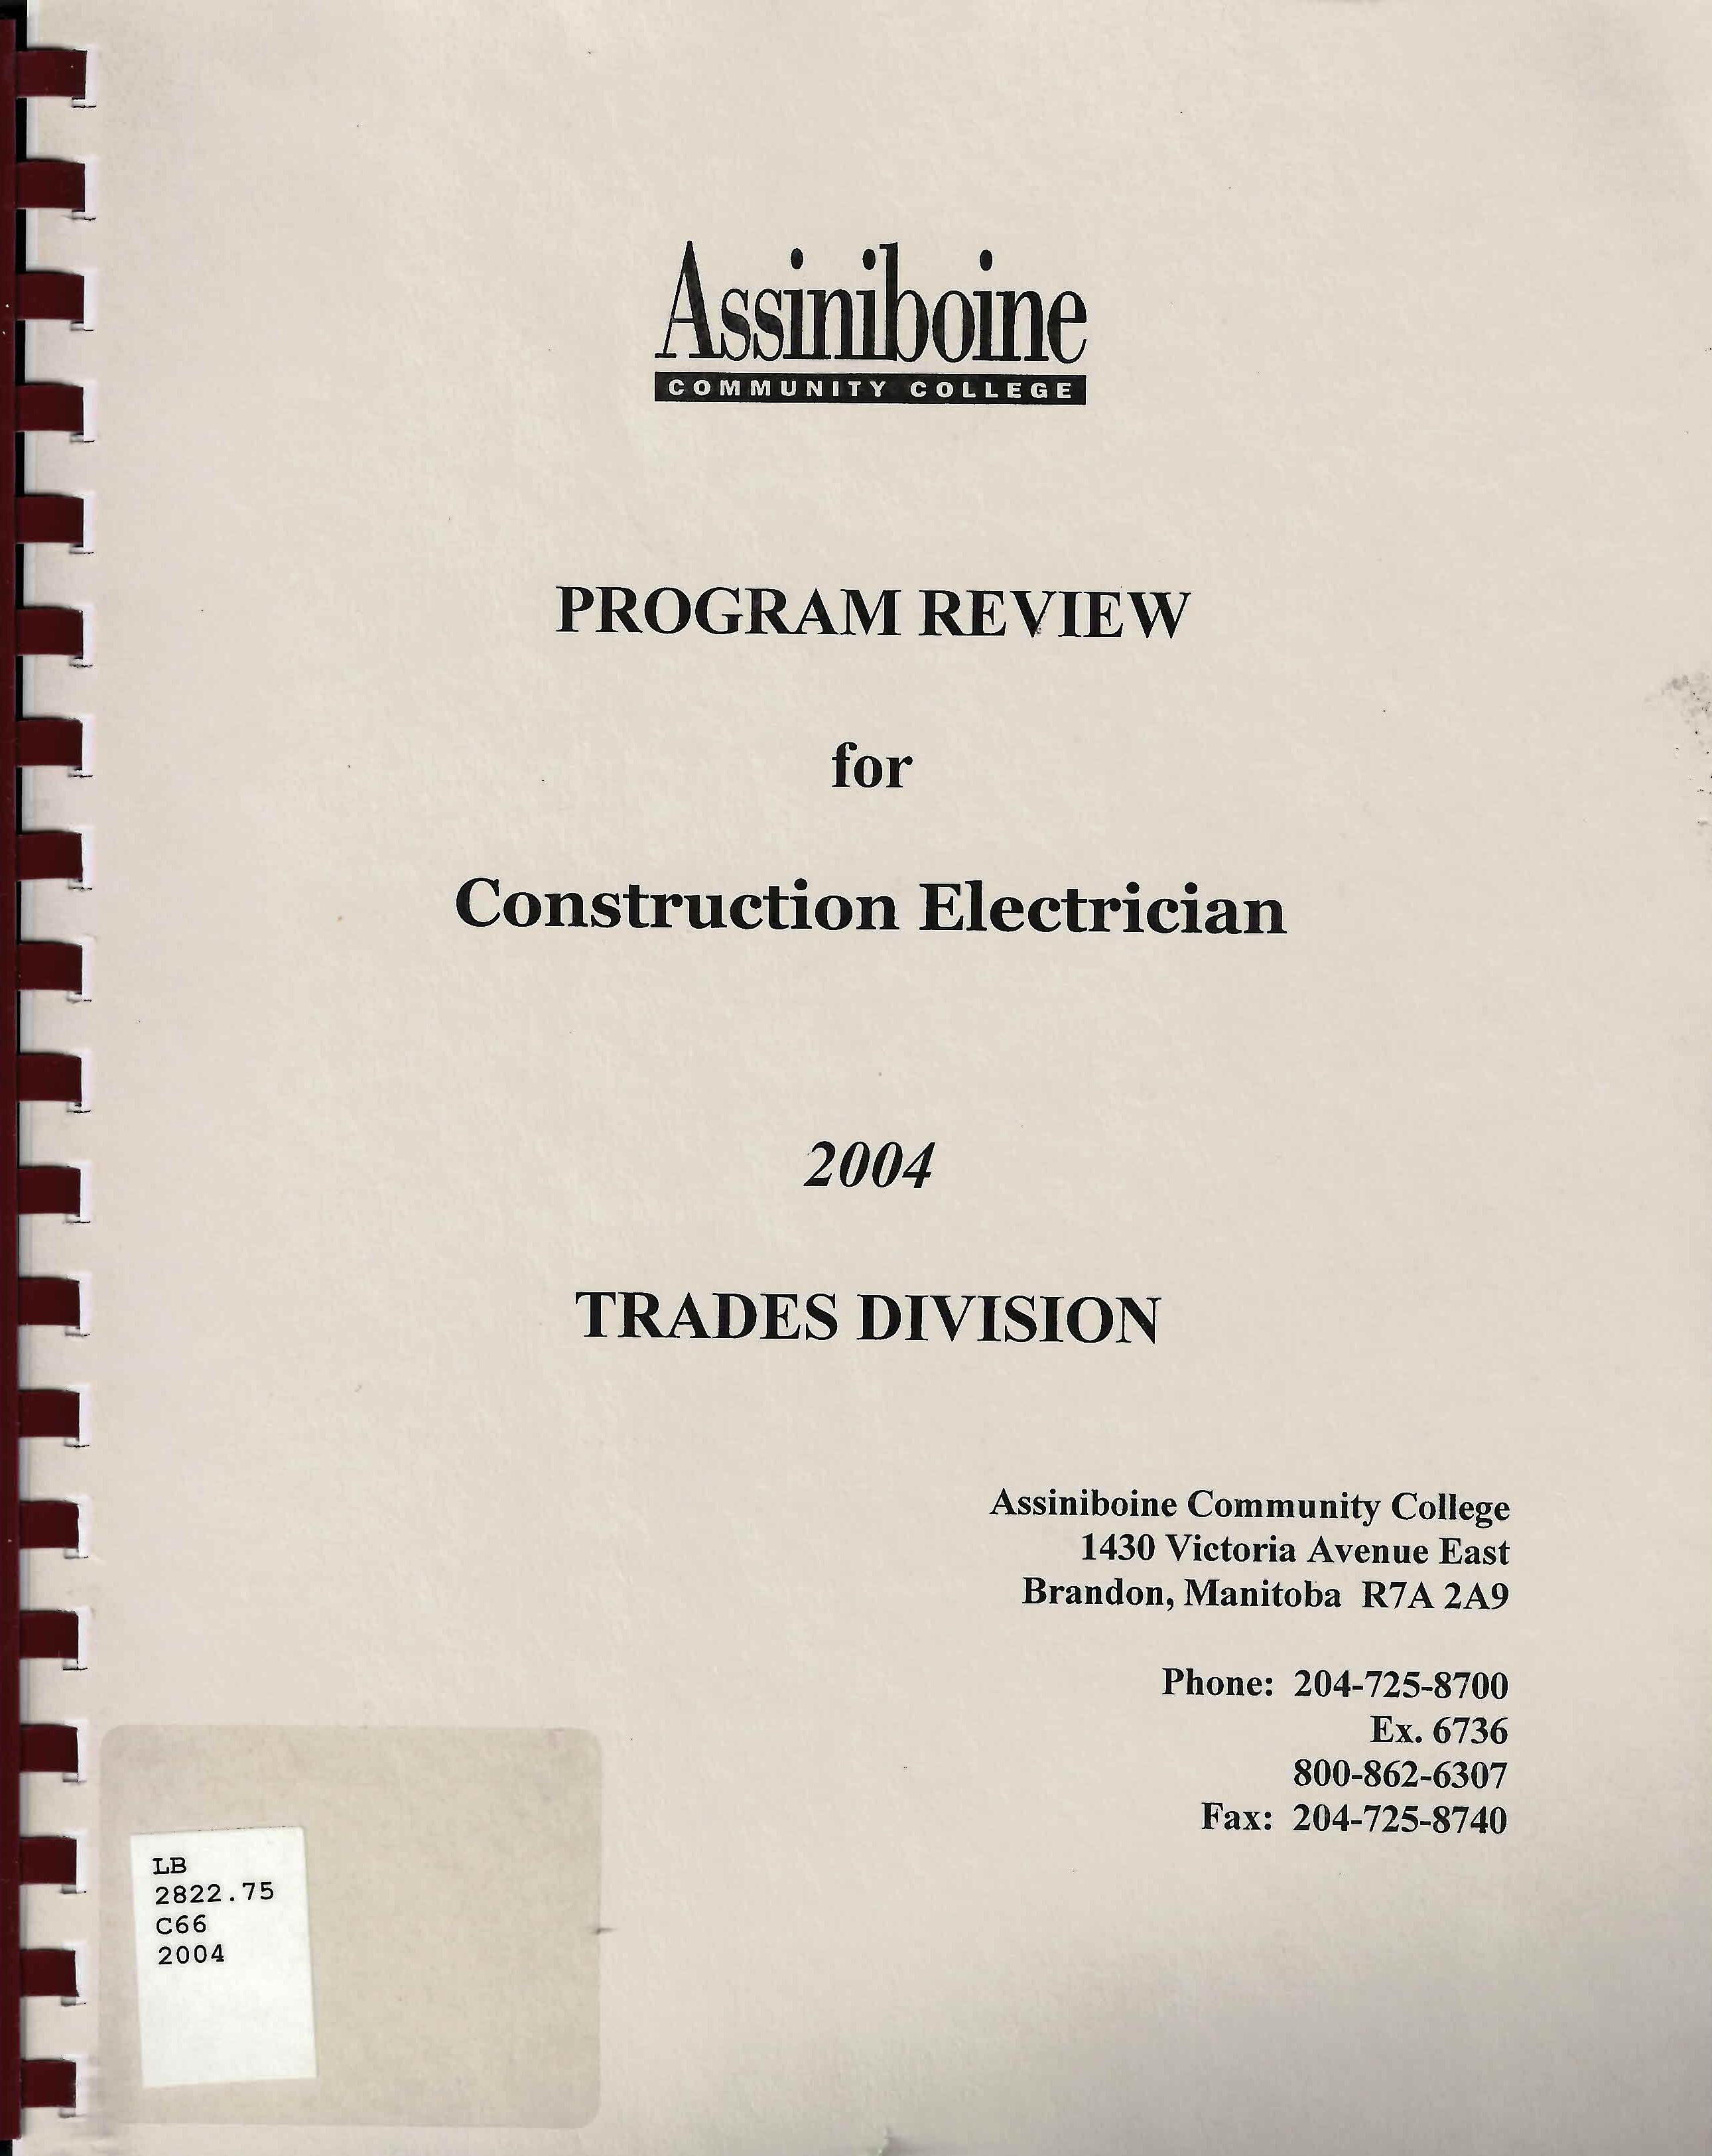 Construction electrician : program review